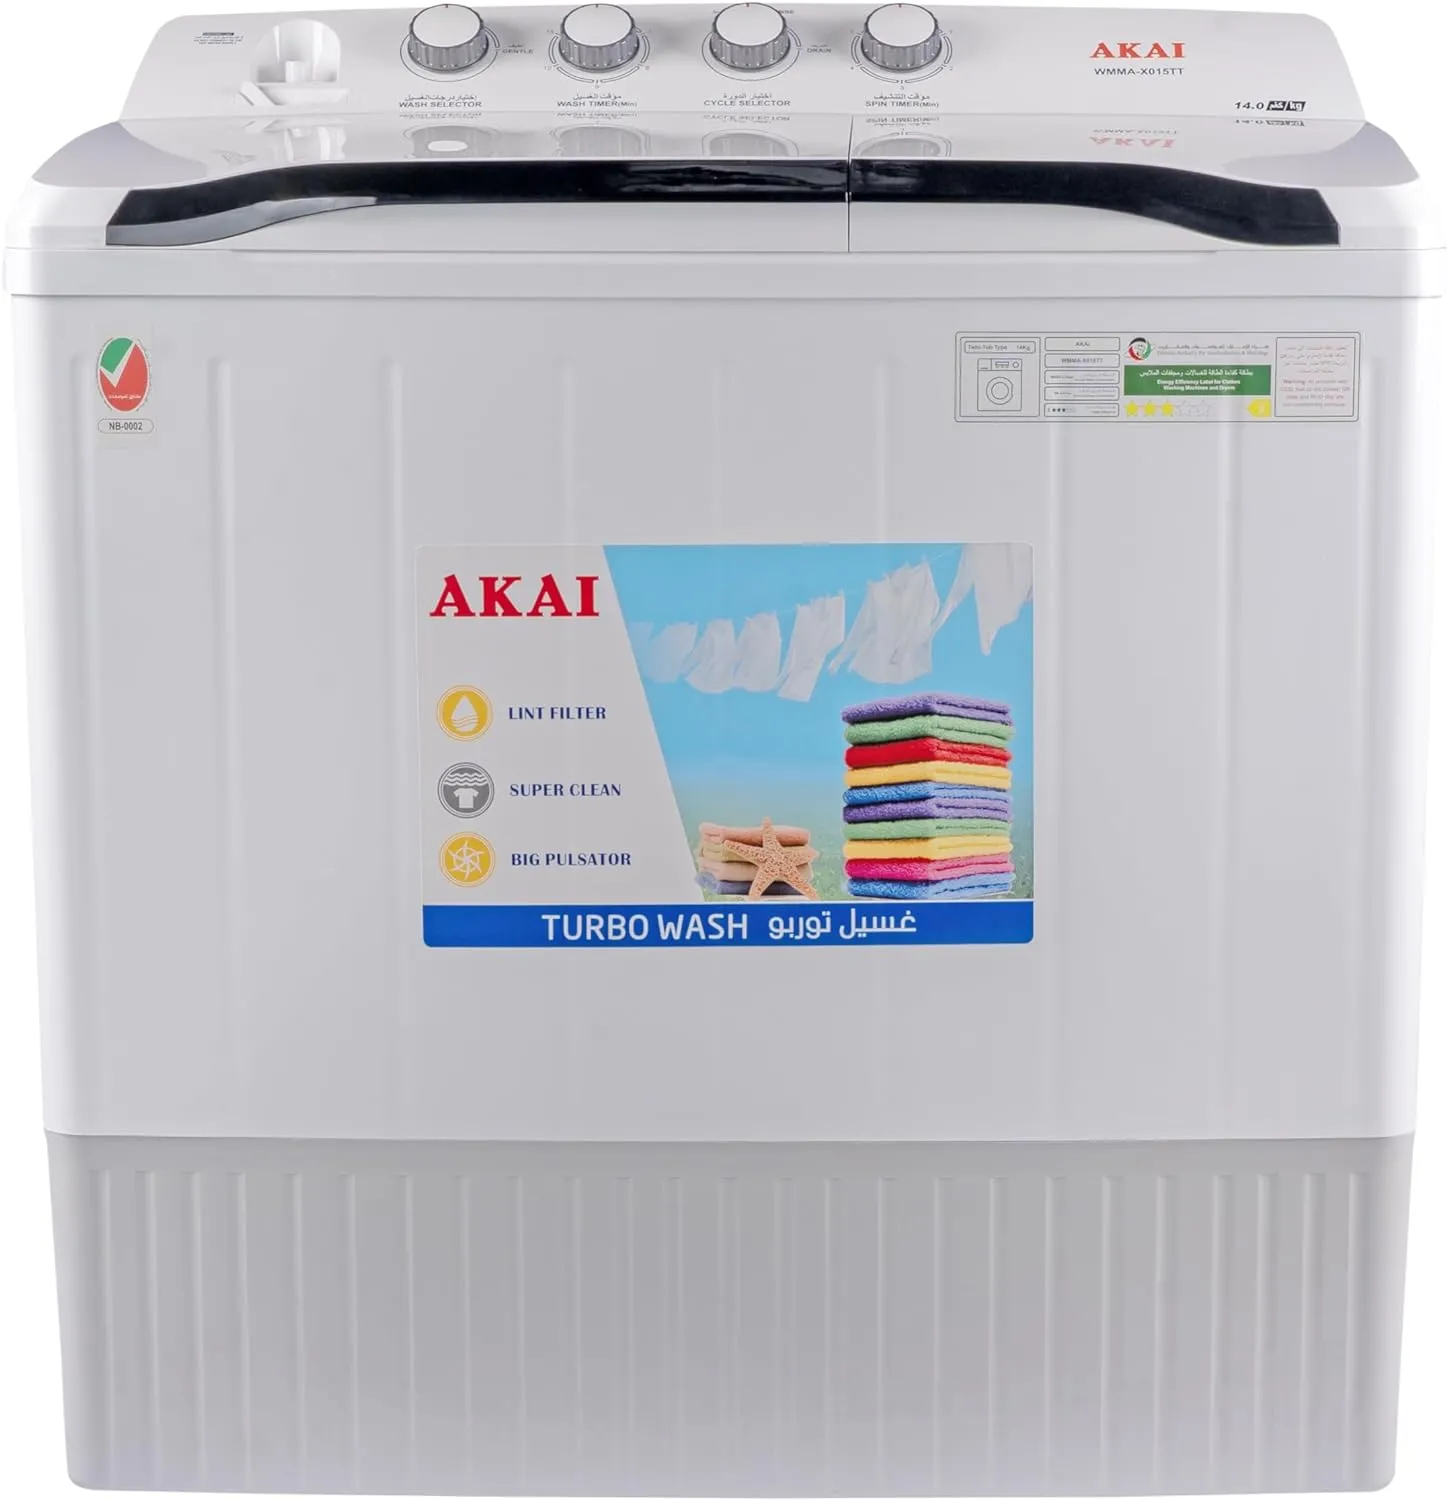 Akai 14 Kg Twin Tub Semi Automatic Washing Machine Color White Model | WMMAX014TT | 1 Year Warranty.